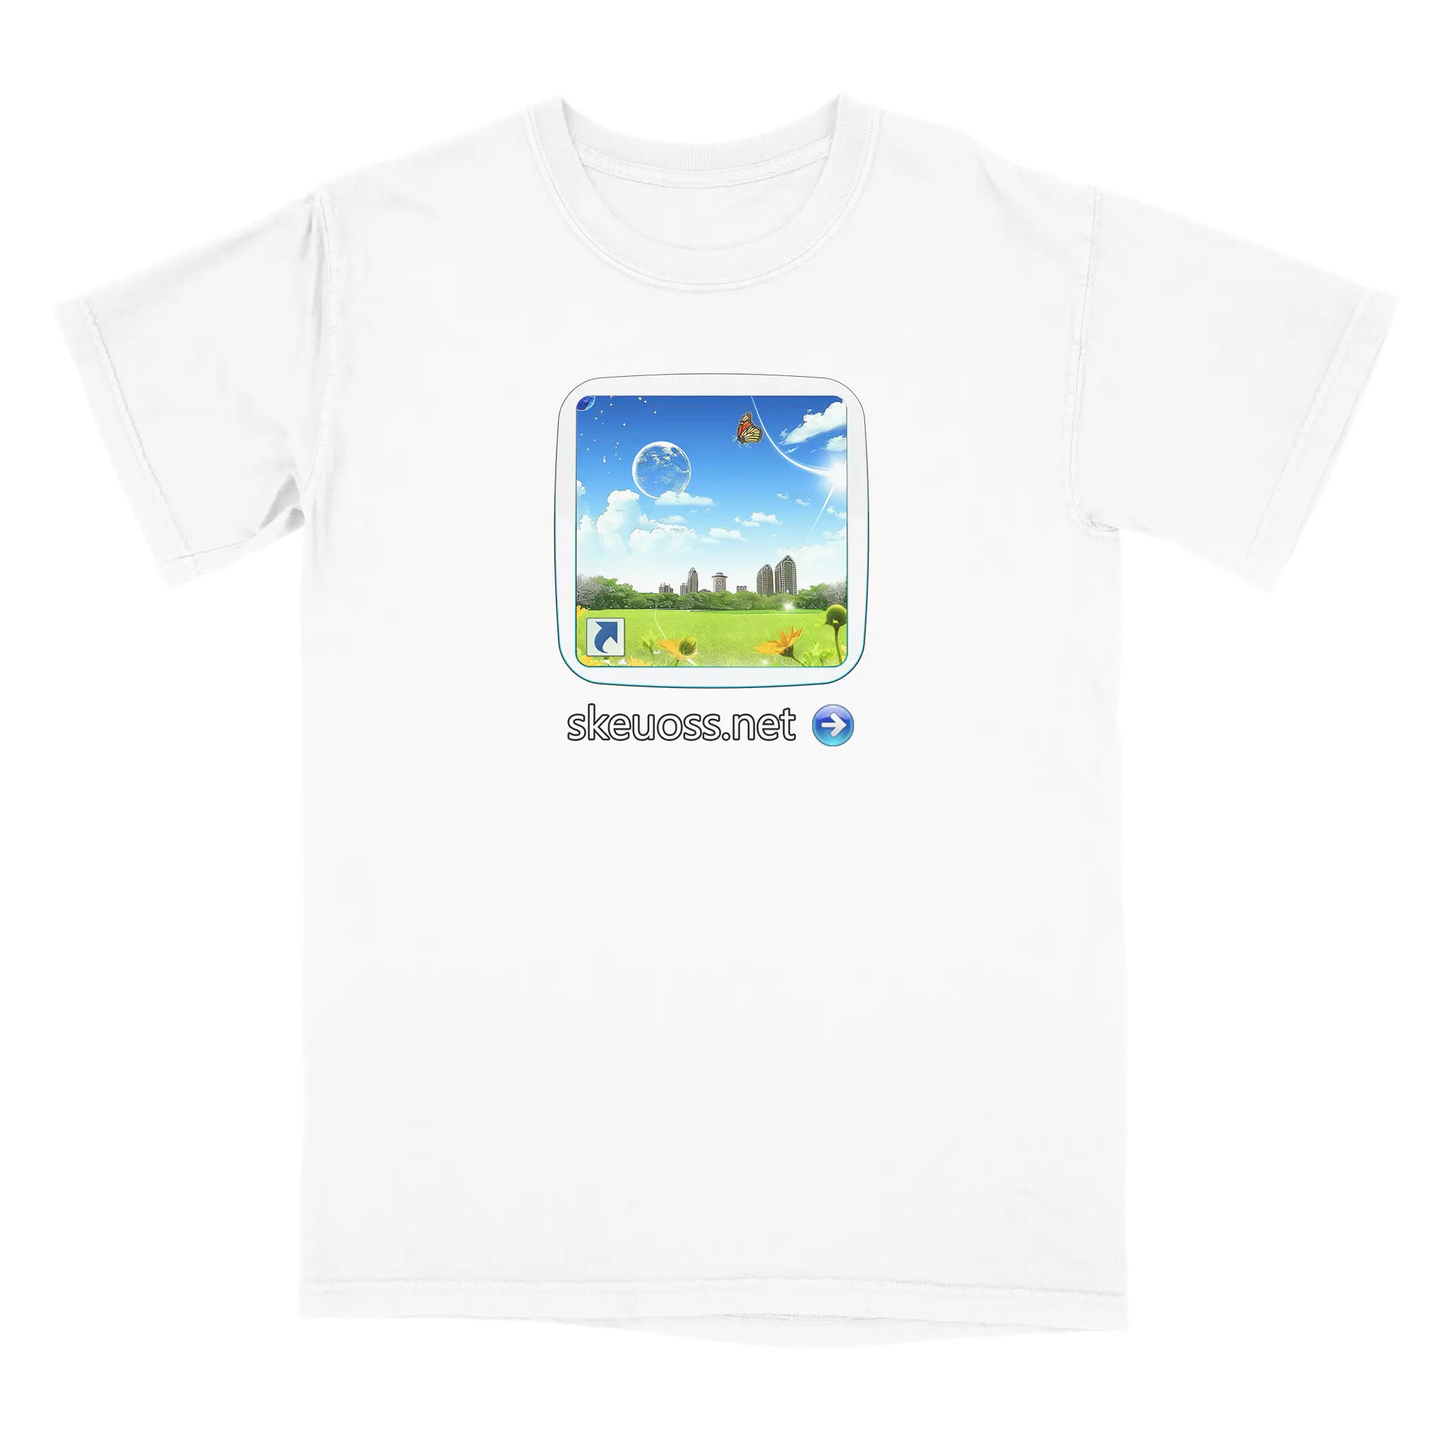 Frutiger Aero T-shirt - User Login Collection - User 374